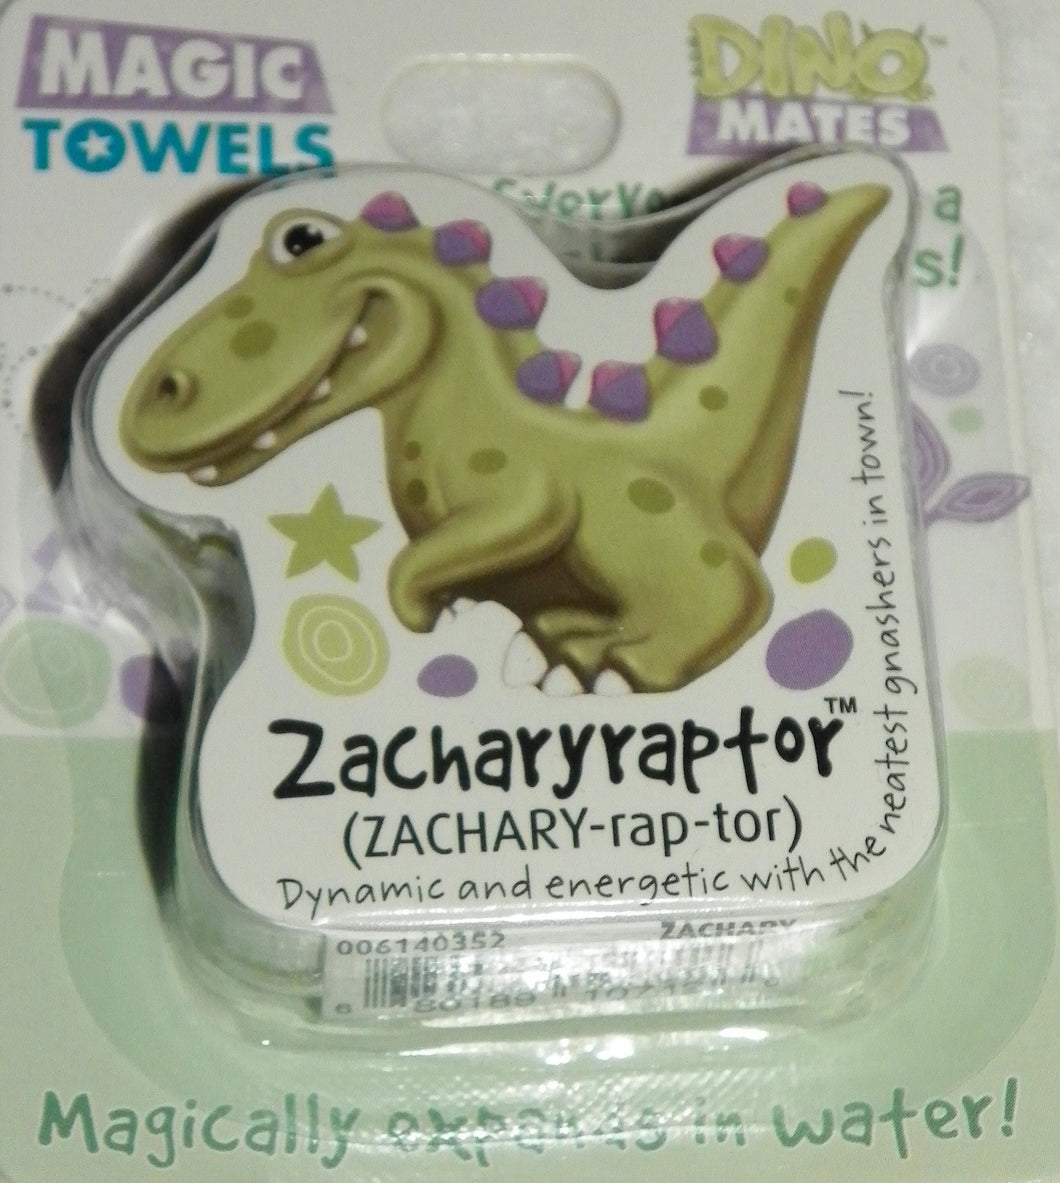 Dinomatic Magic Towel-Zacharyraptor